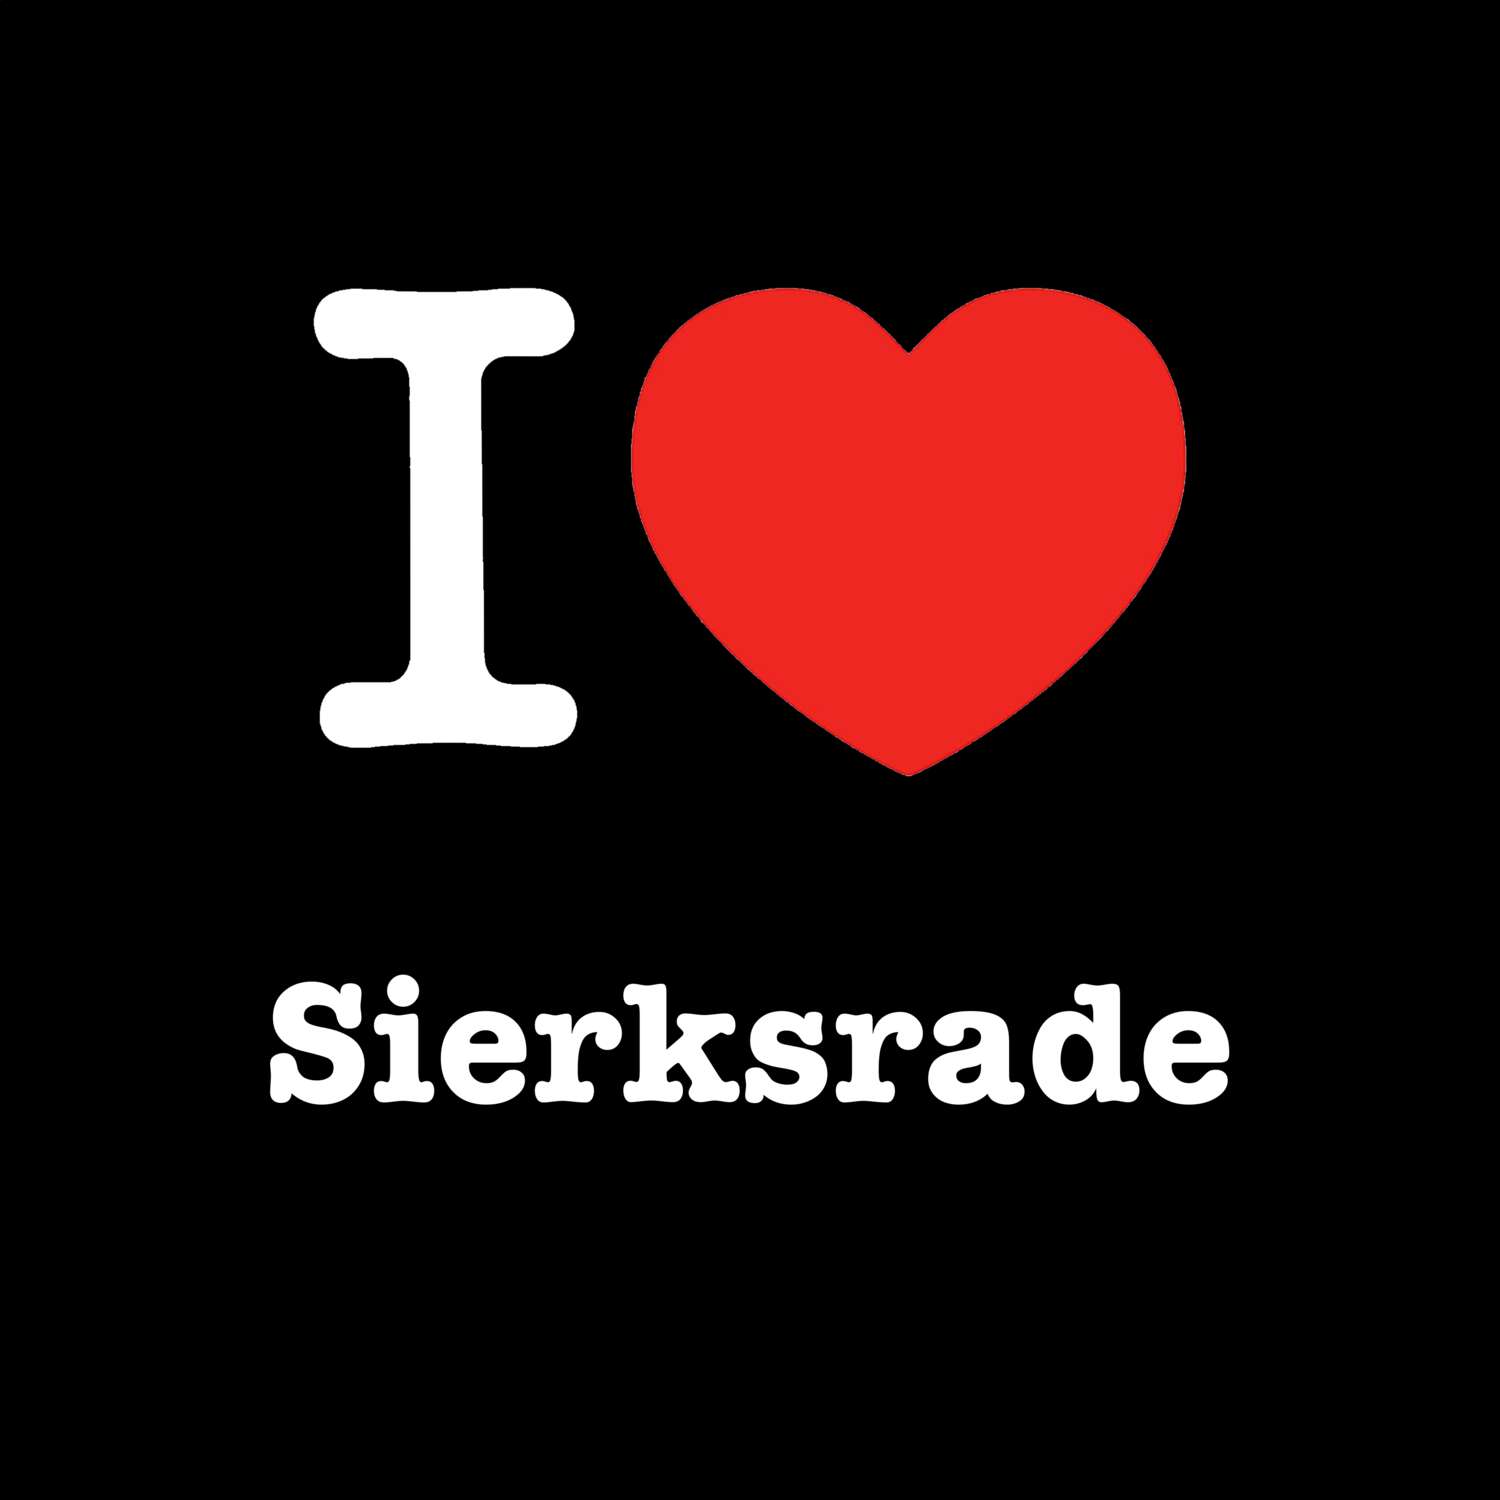 Sierksrade T-Shirt »I love«